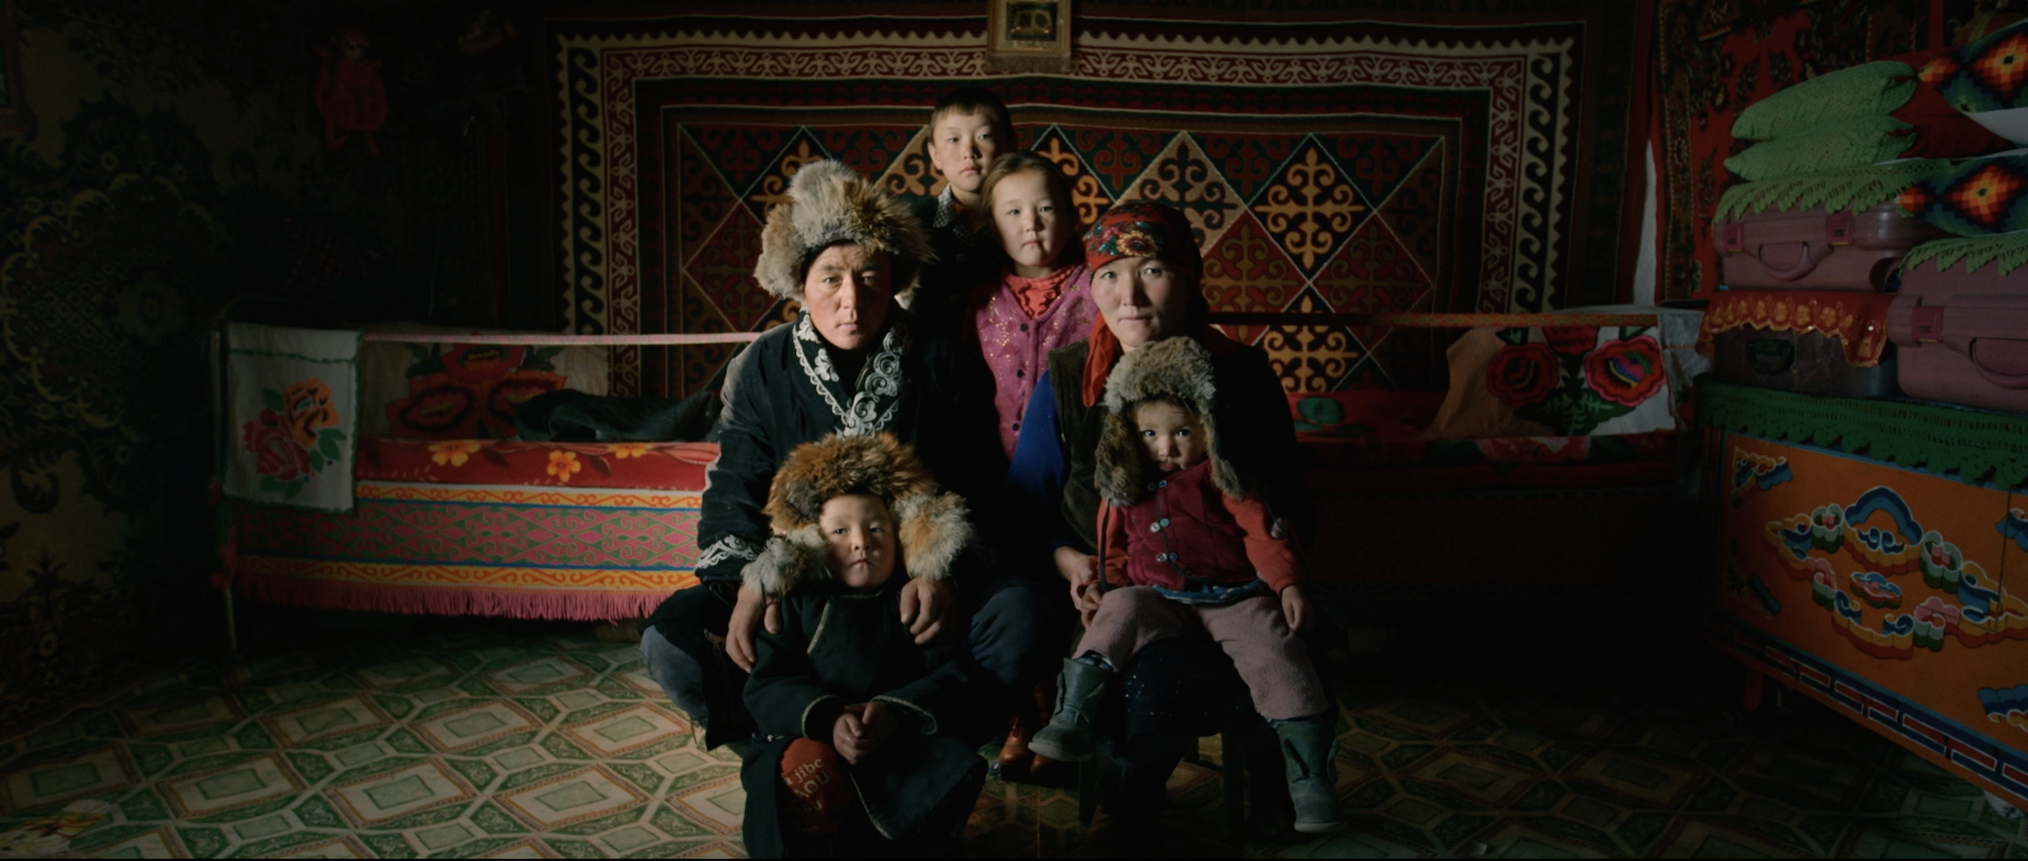 Konki Family, Kazakh-Mongolian Eagle Hunters in Onward